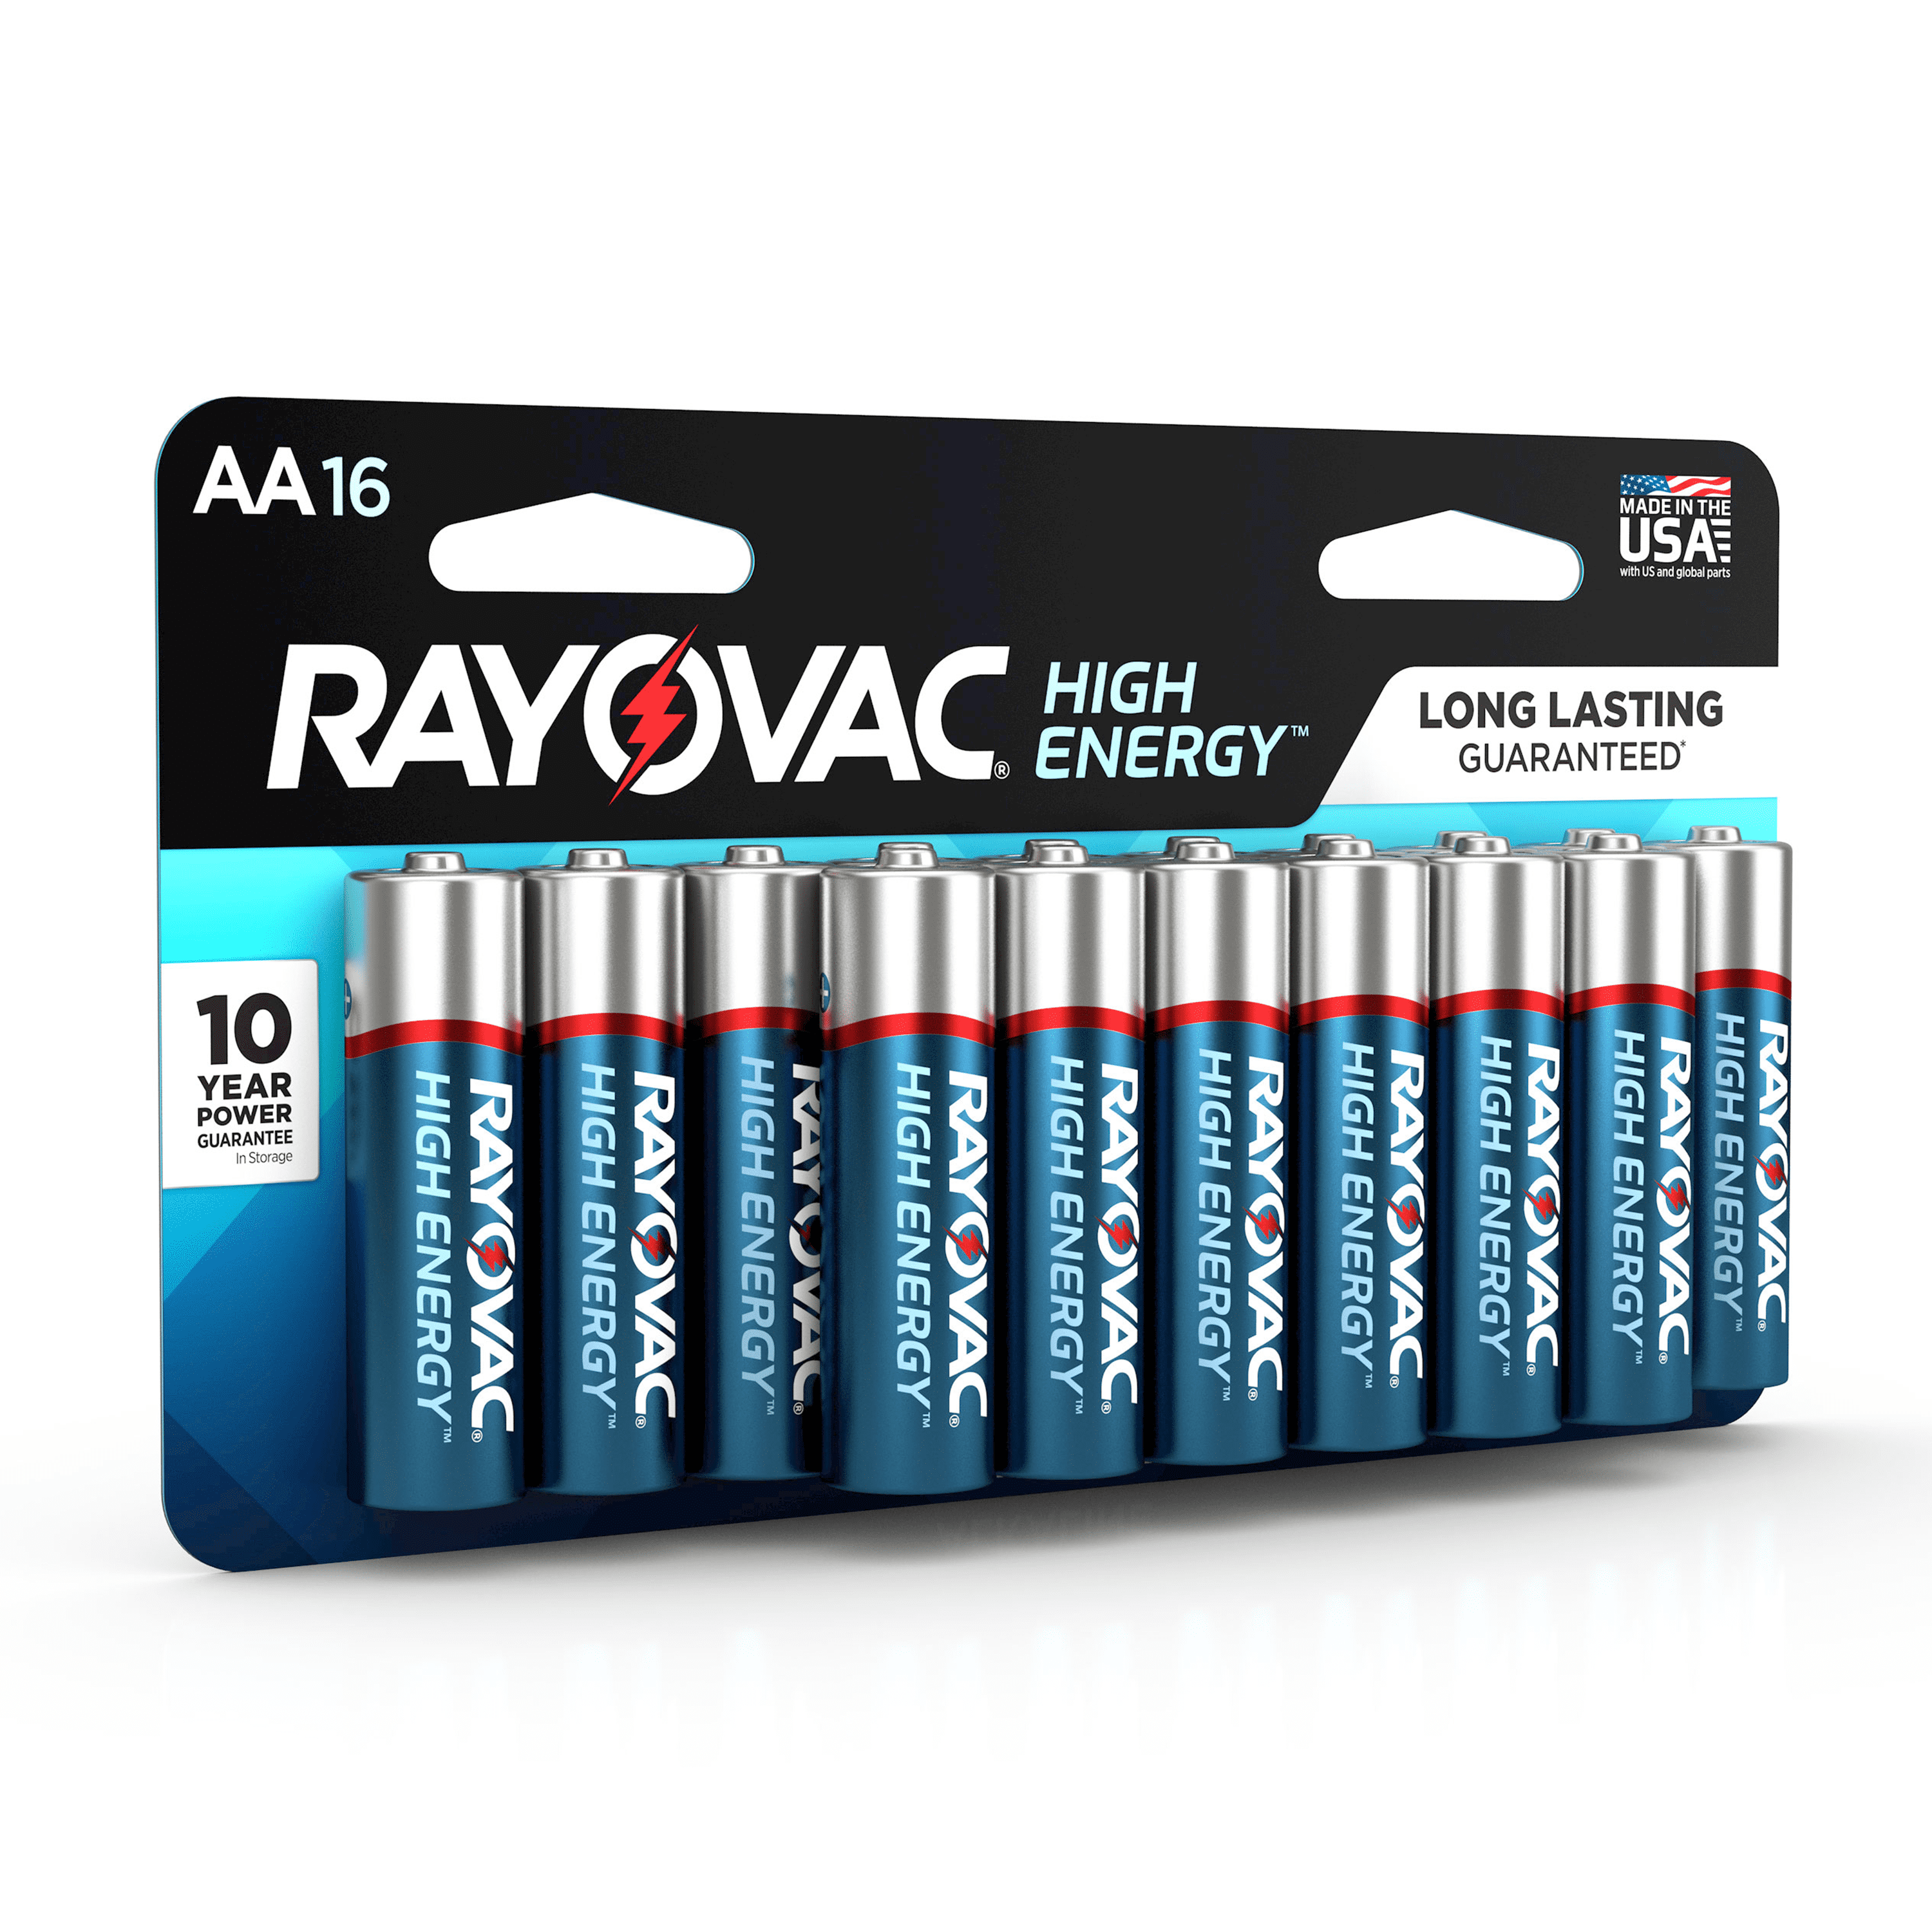 Rayovac High Energy Alkaline Aa Batteries 16 Count